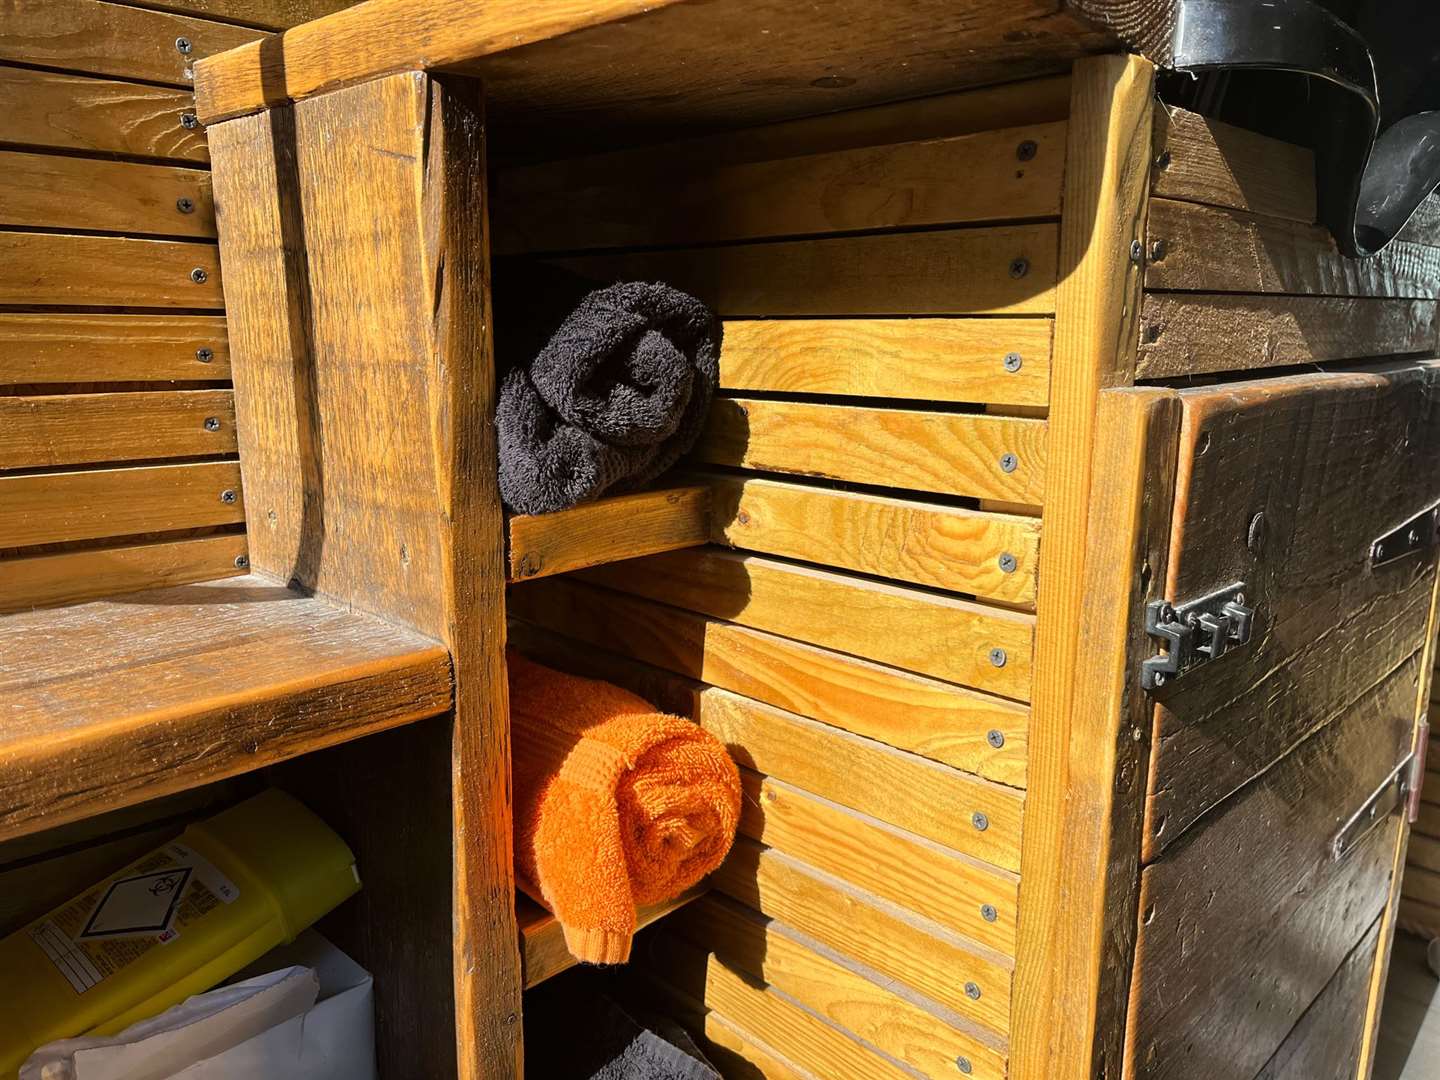 towel shelves inside the van